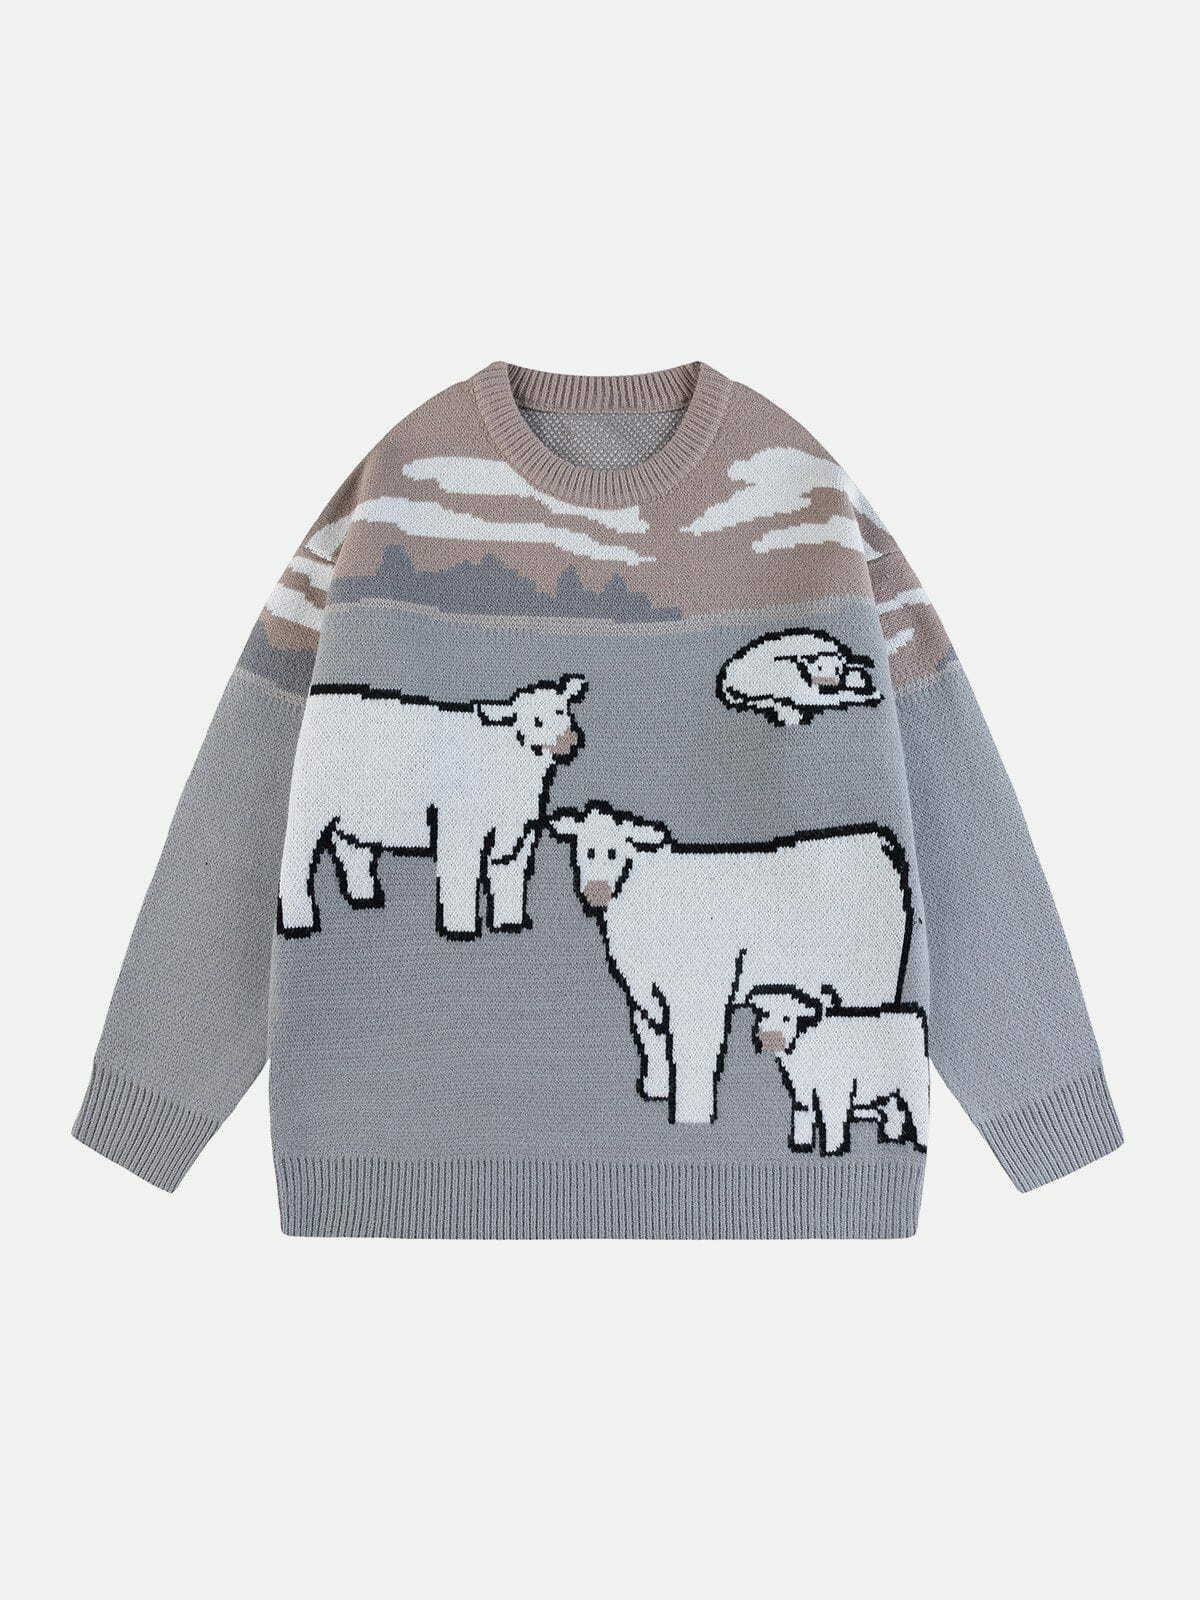 cow jacquard sweater colorblocked urban edge 7007